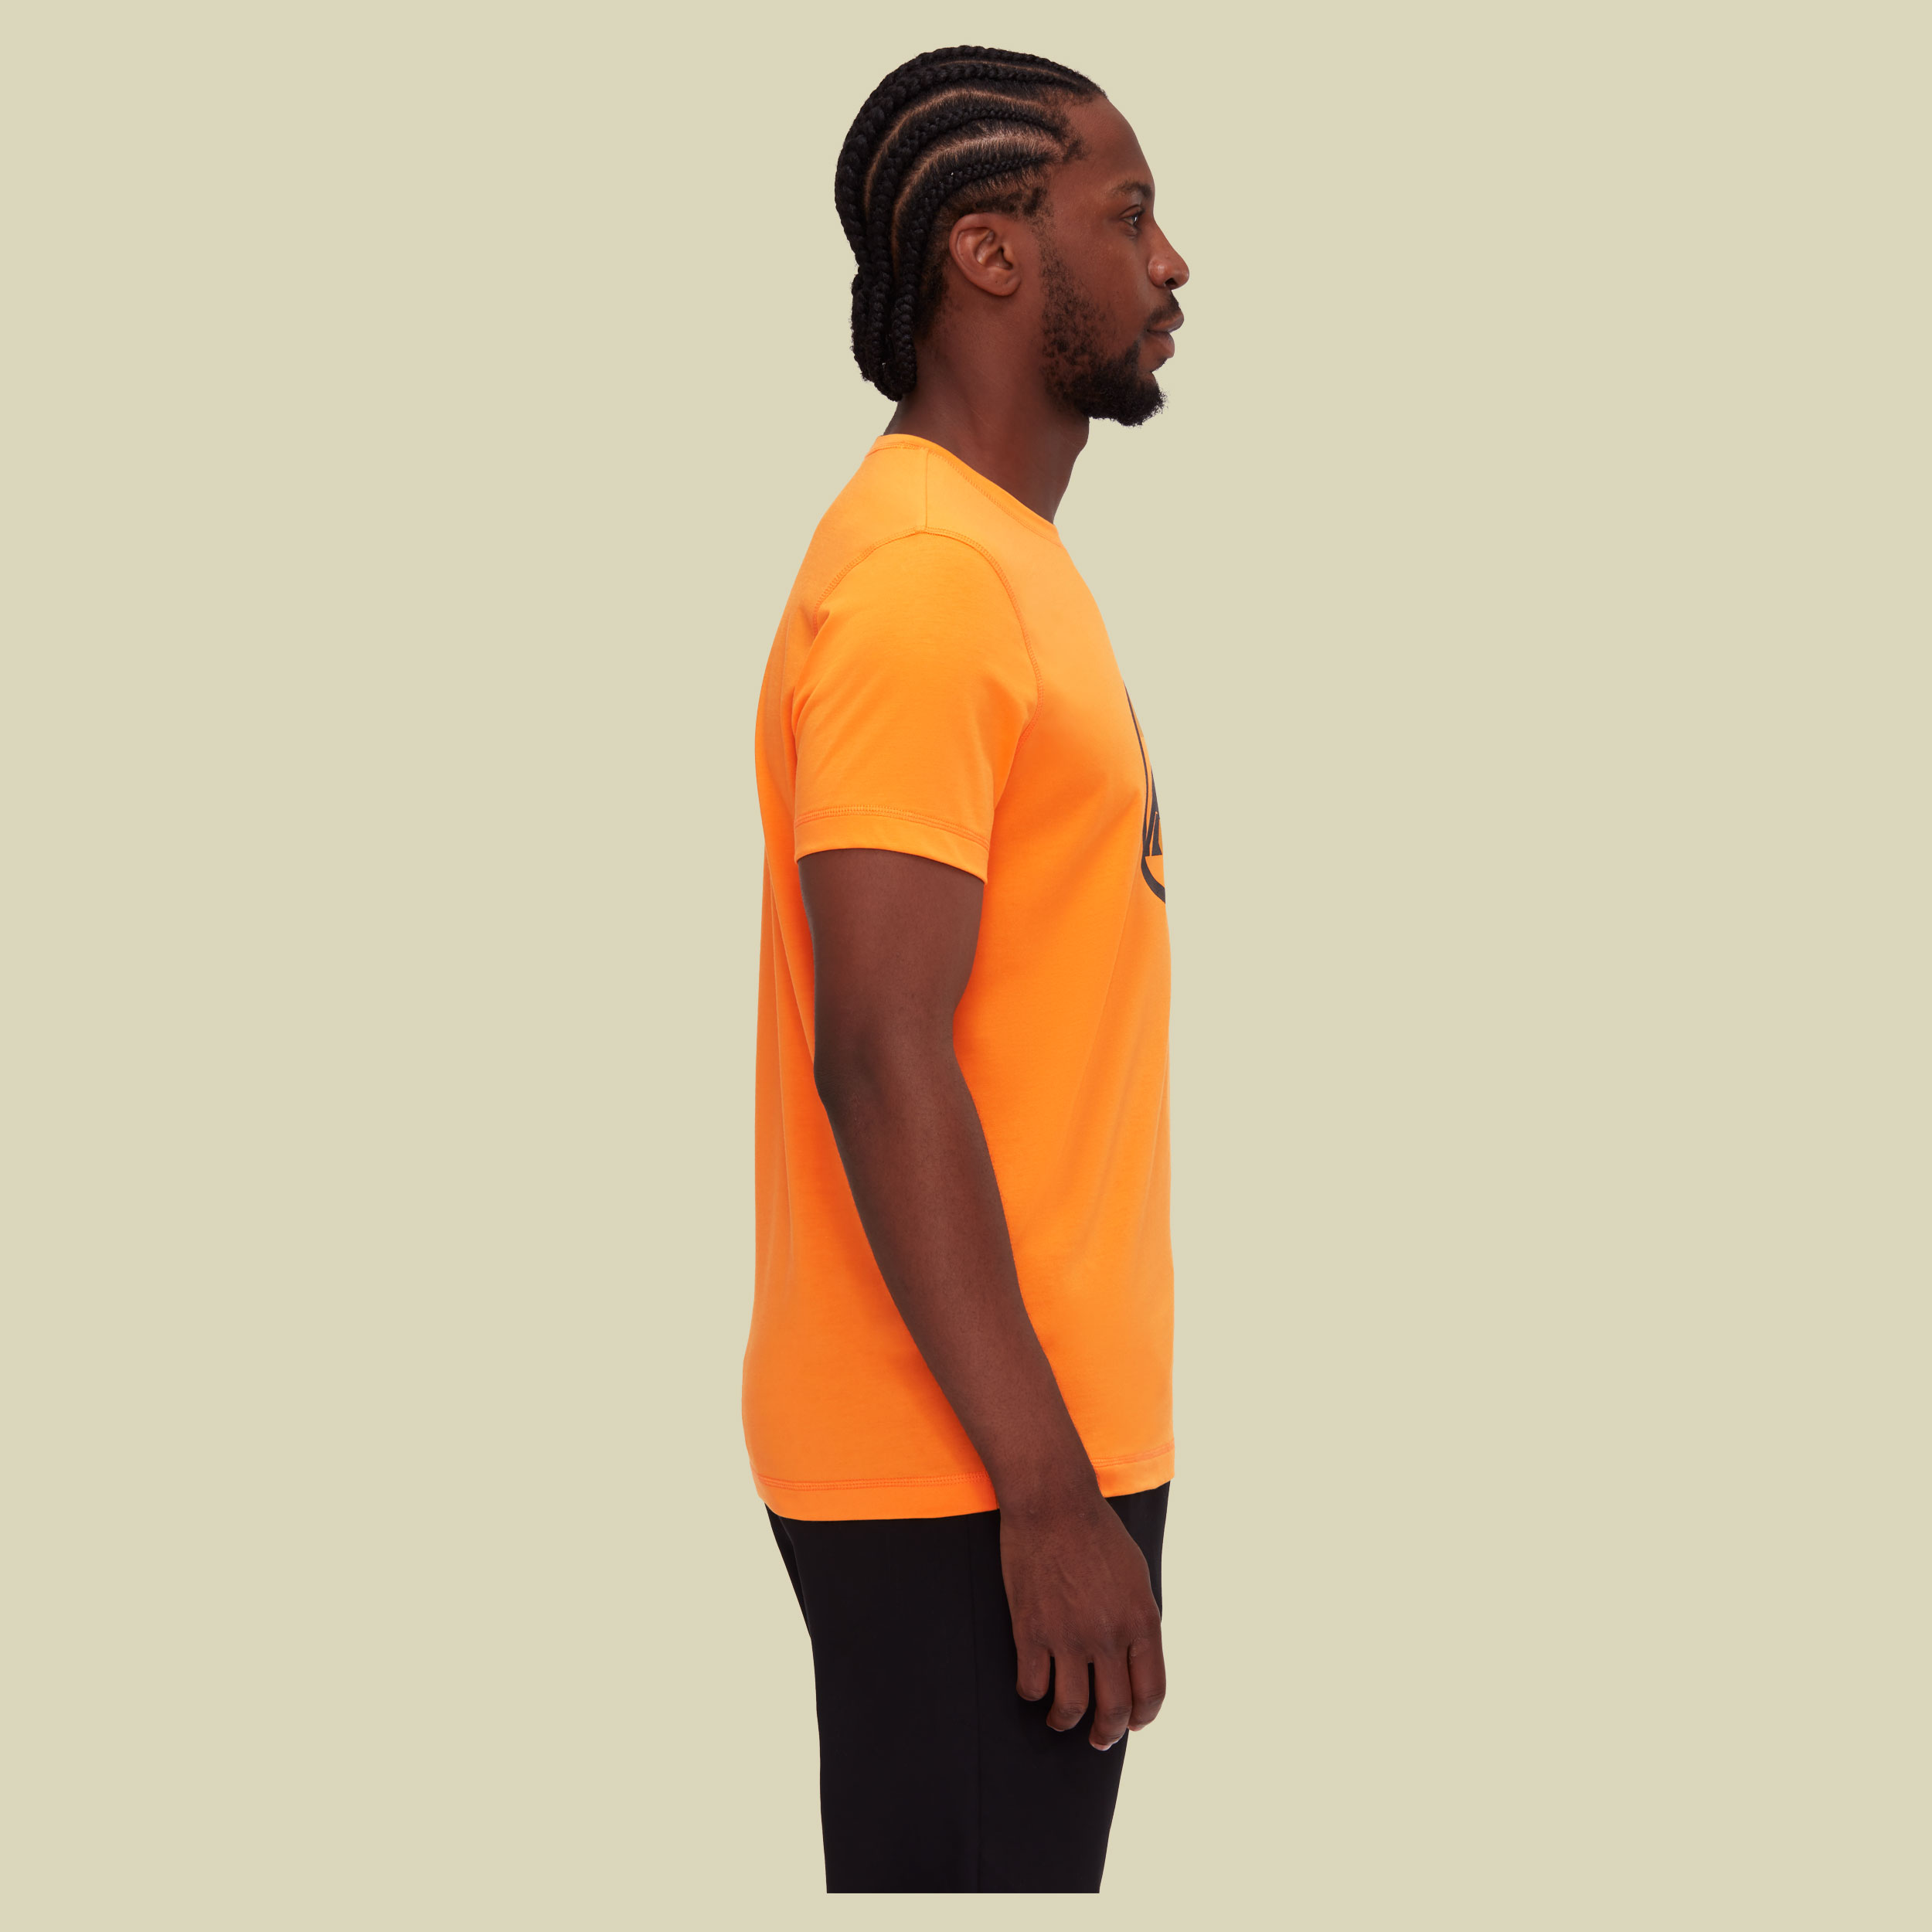 Mammut Core T-Shirt Men Classic orange M - tangerine